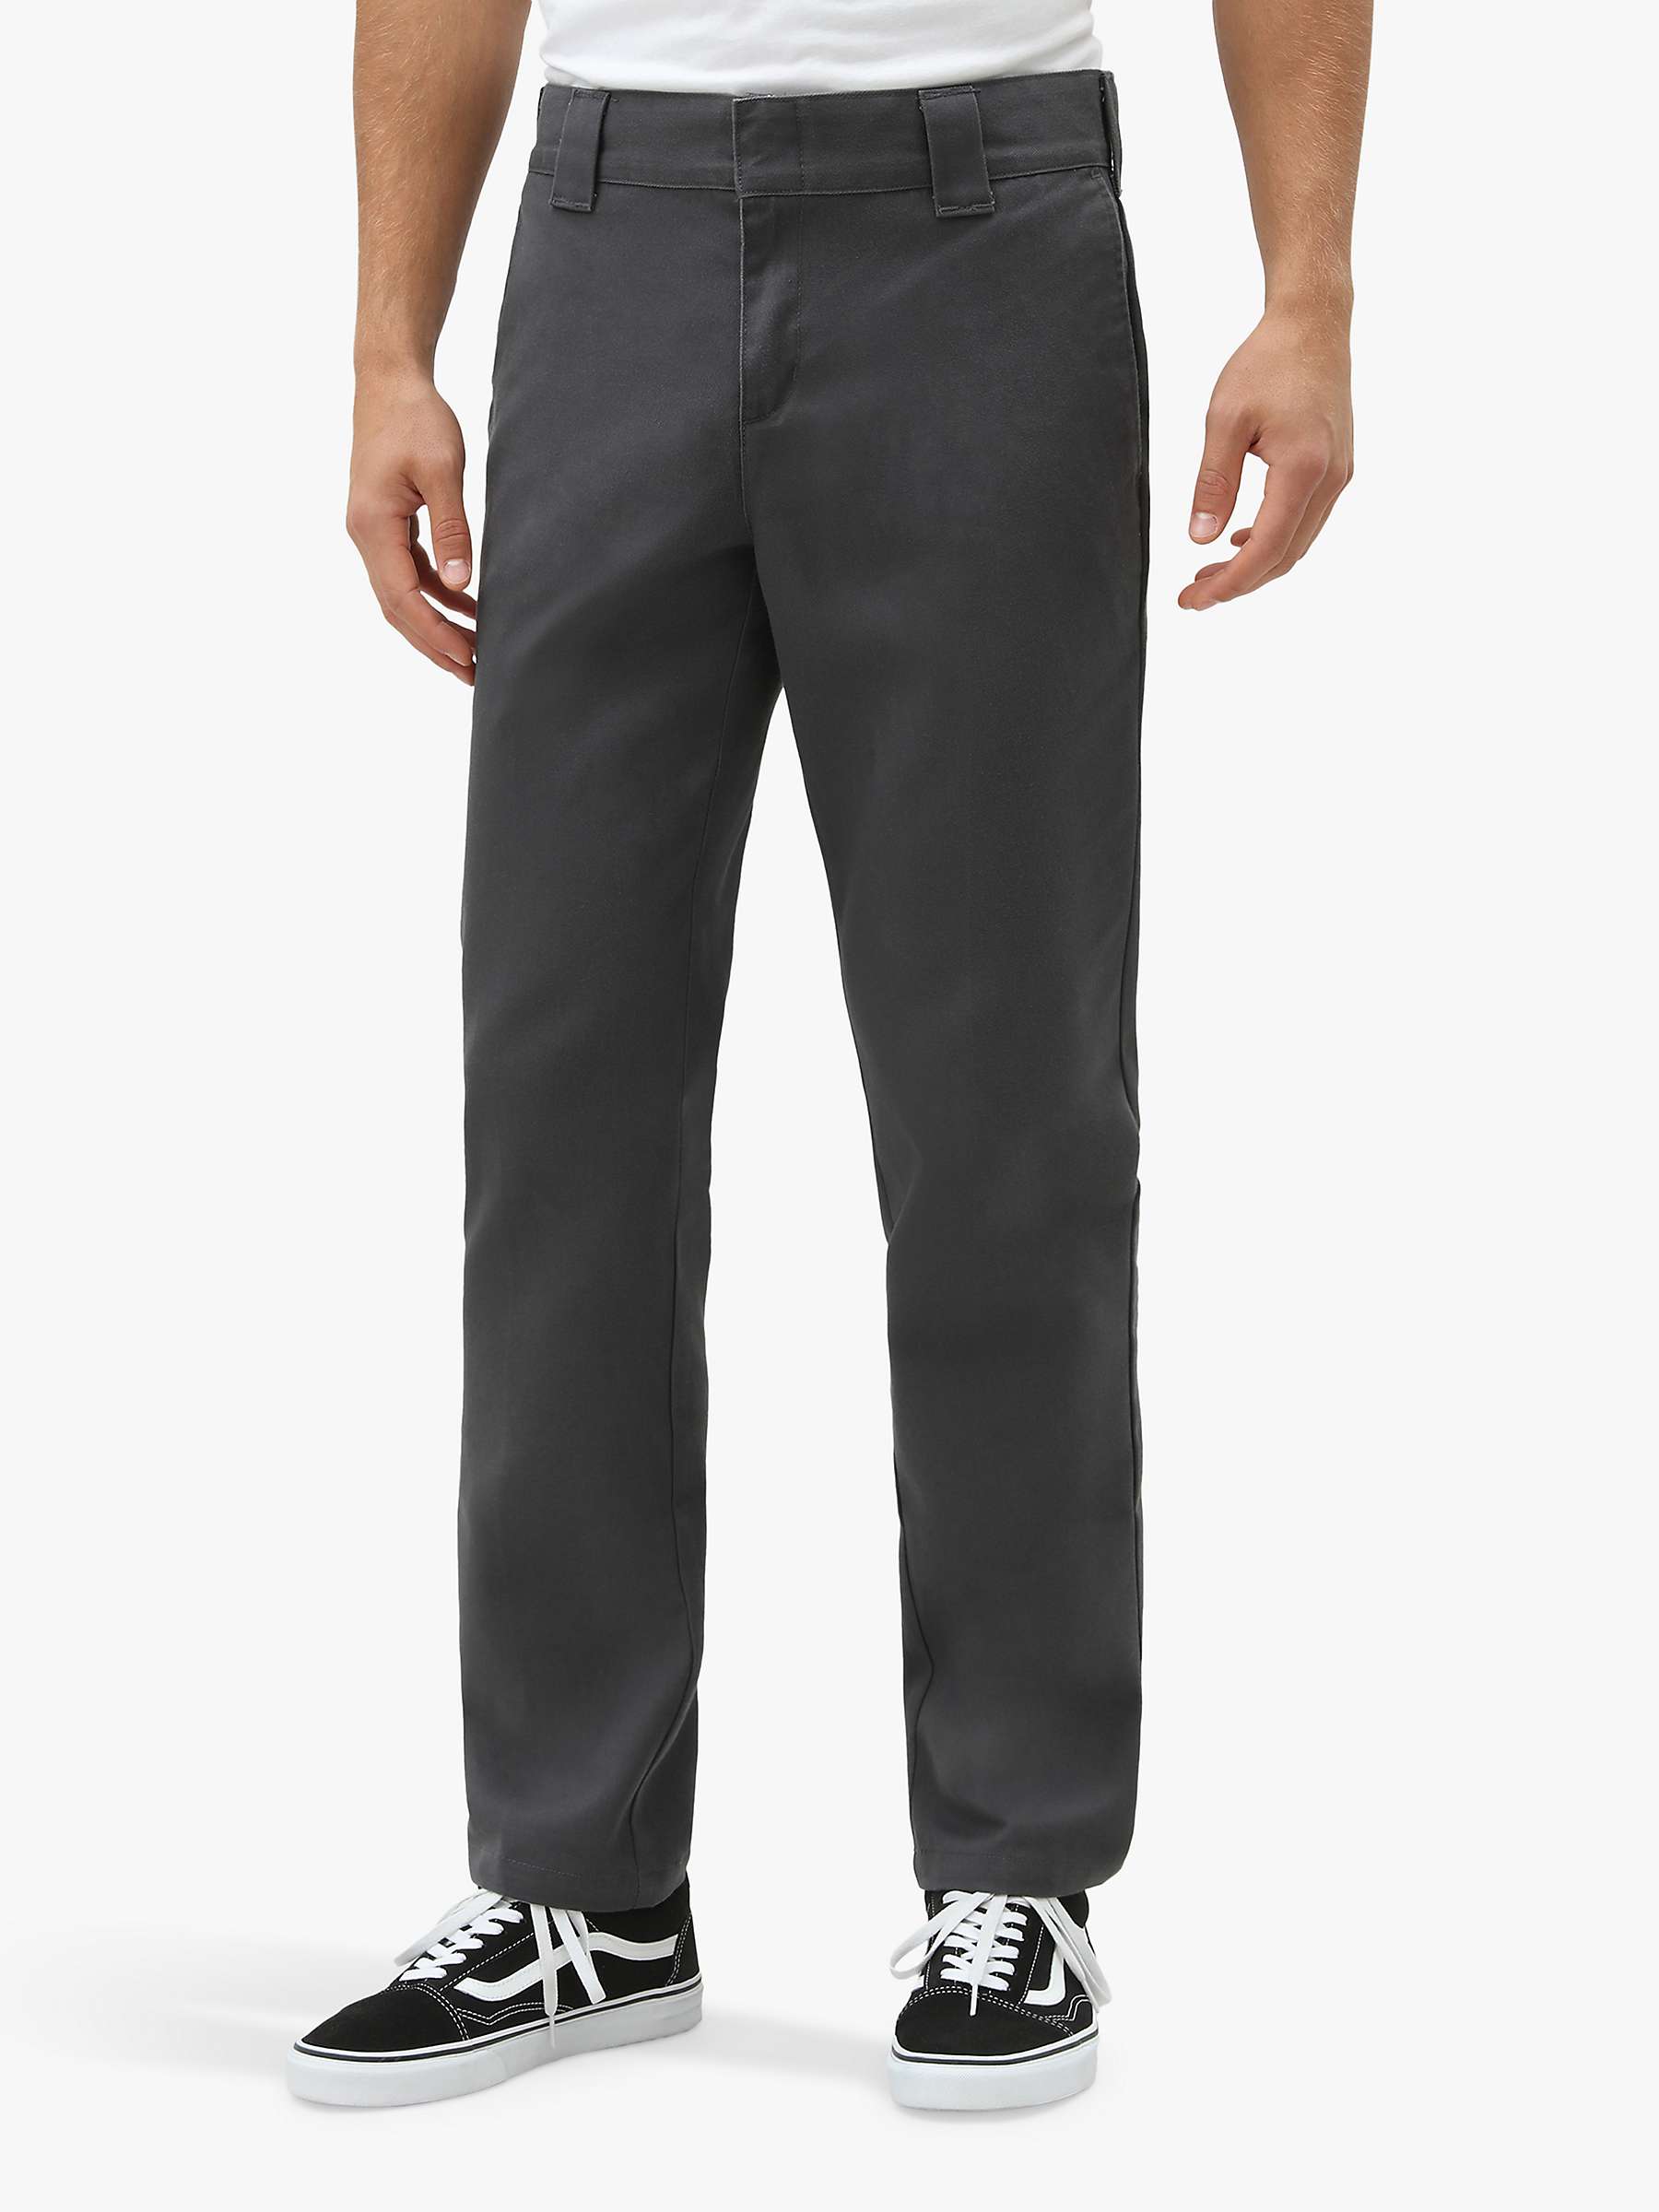 Dickies 872 Slim Fit Trousers, Charcoal Grey at John Lewis & Partners